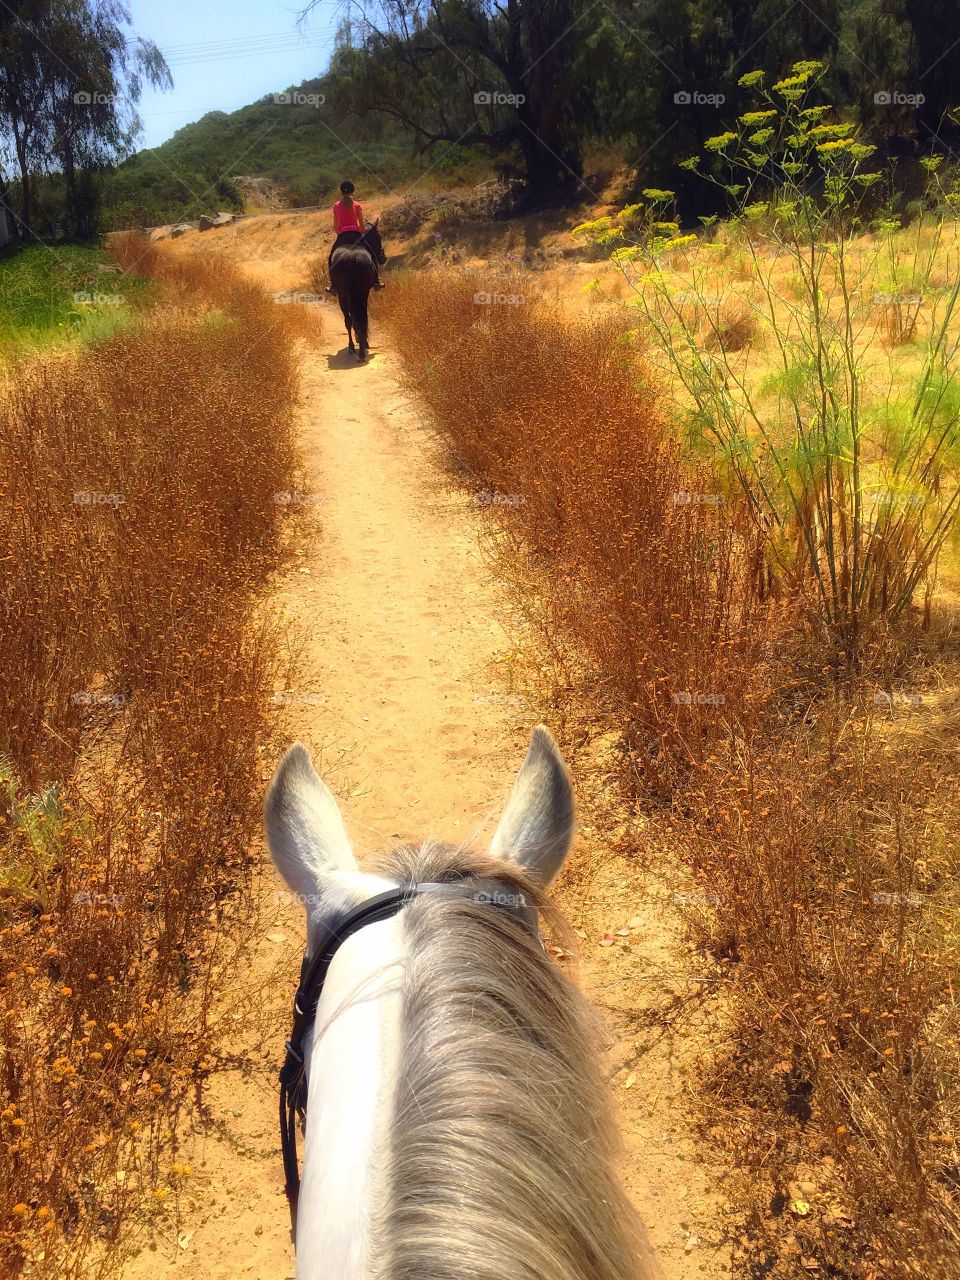 Equestrian Trail Ride